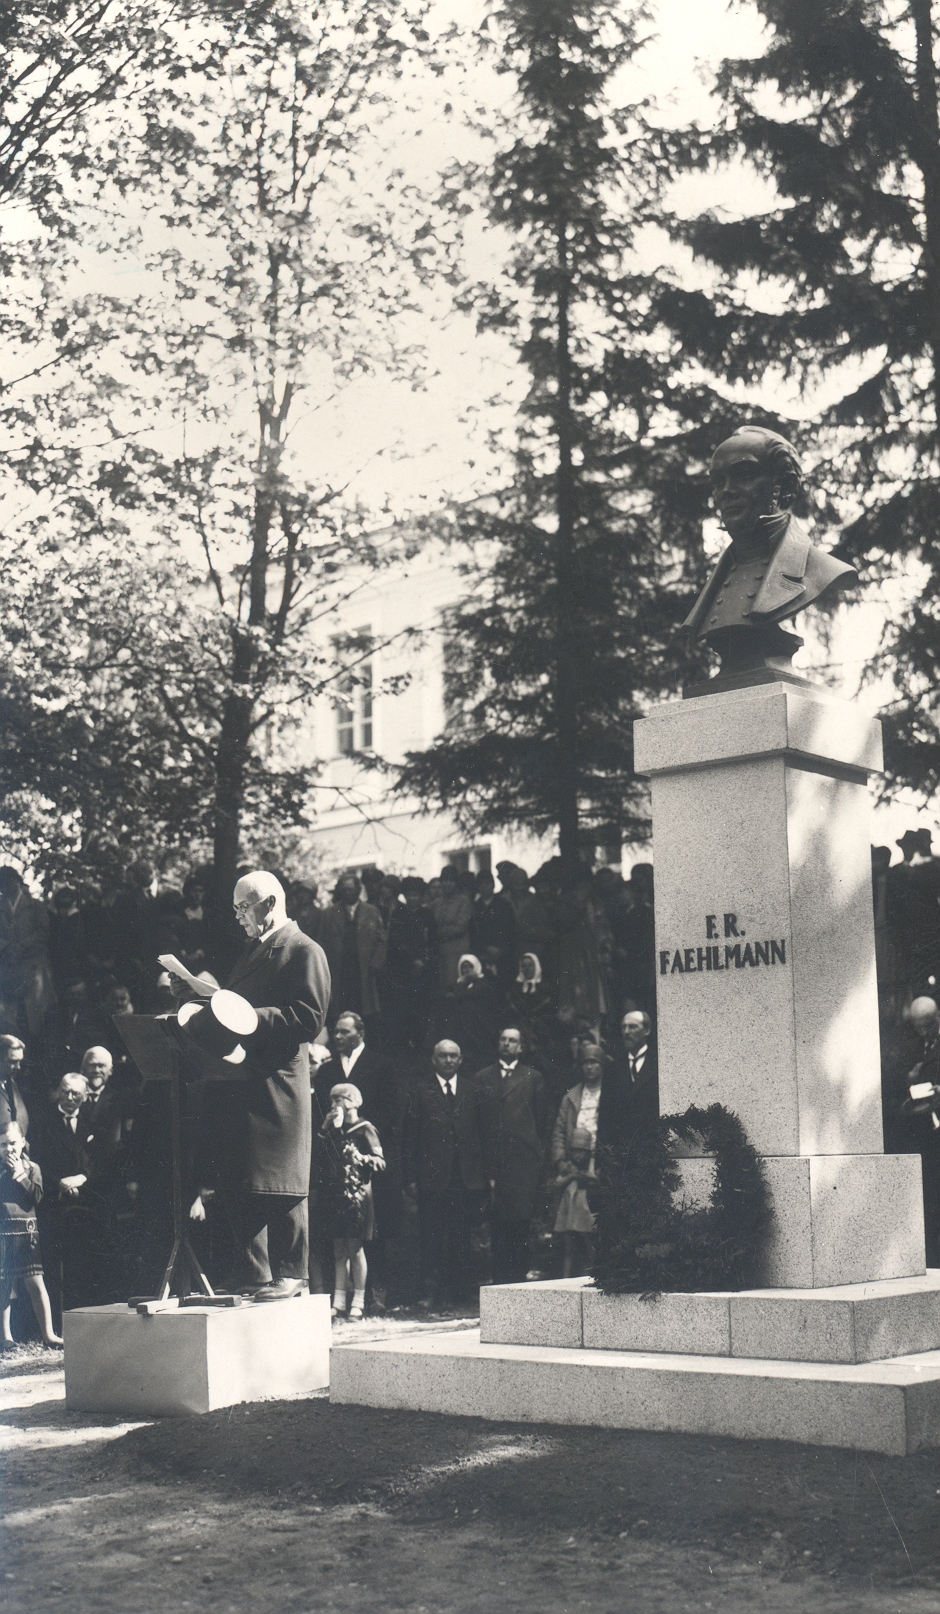 FR. Opening of R. Faehlmann's memorial pillar on Tartu Toomemägi